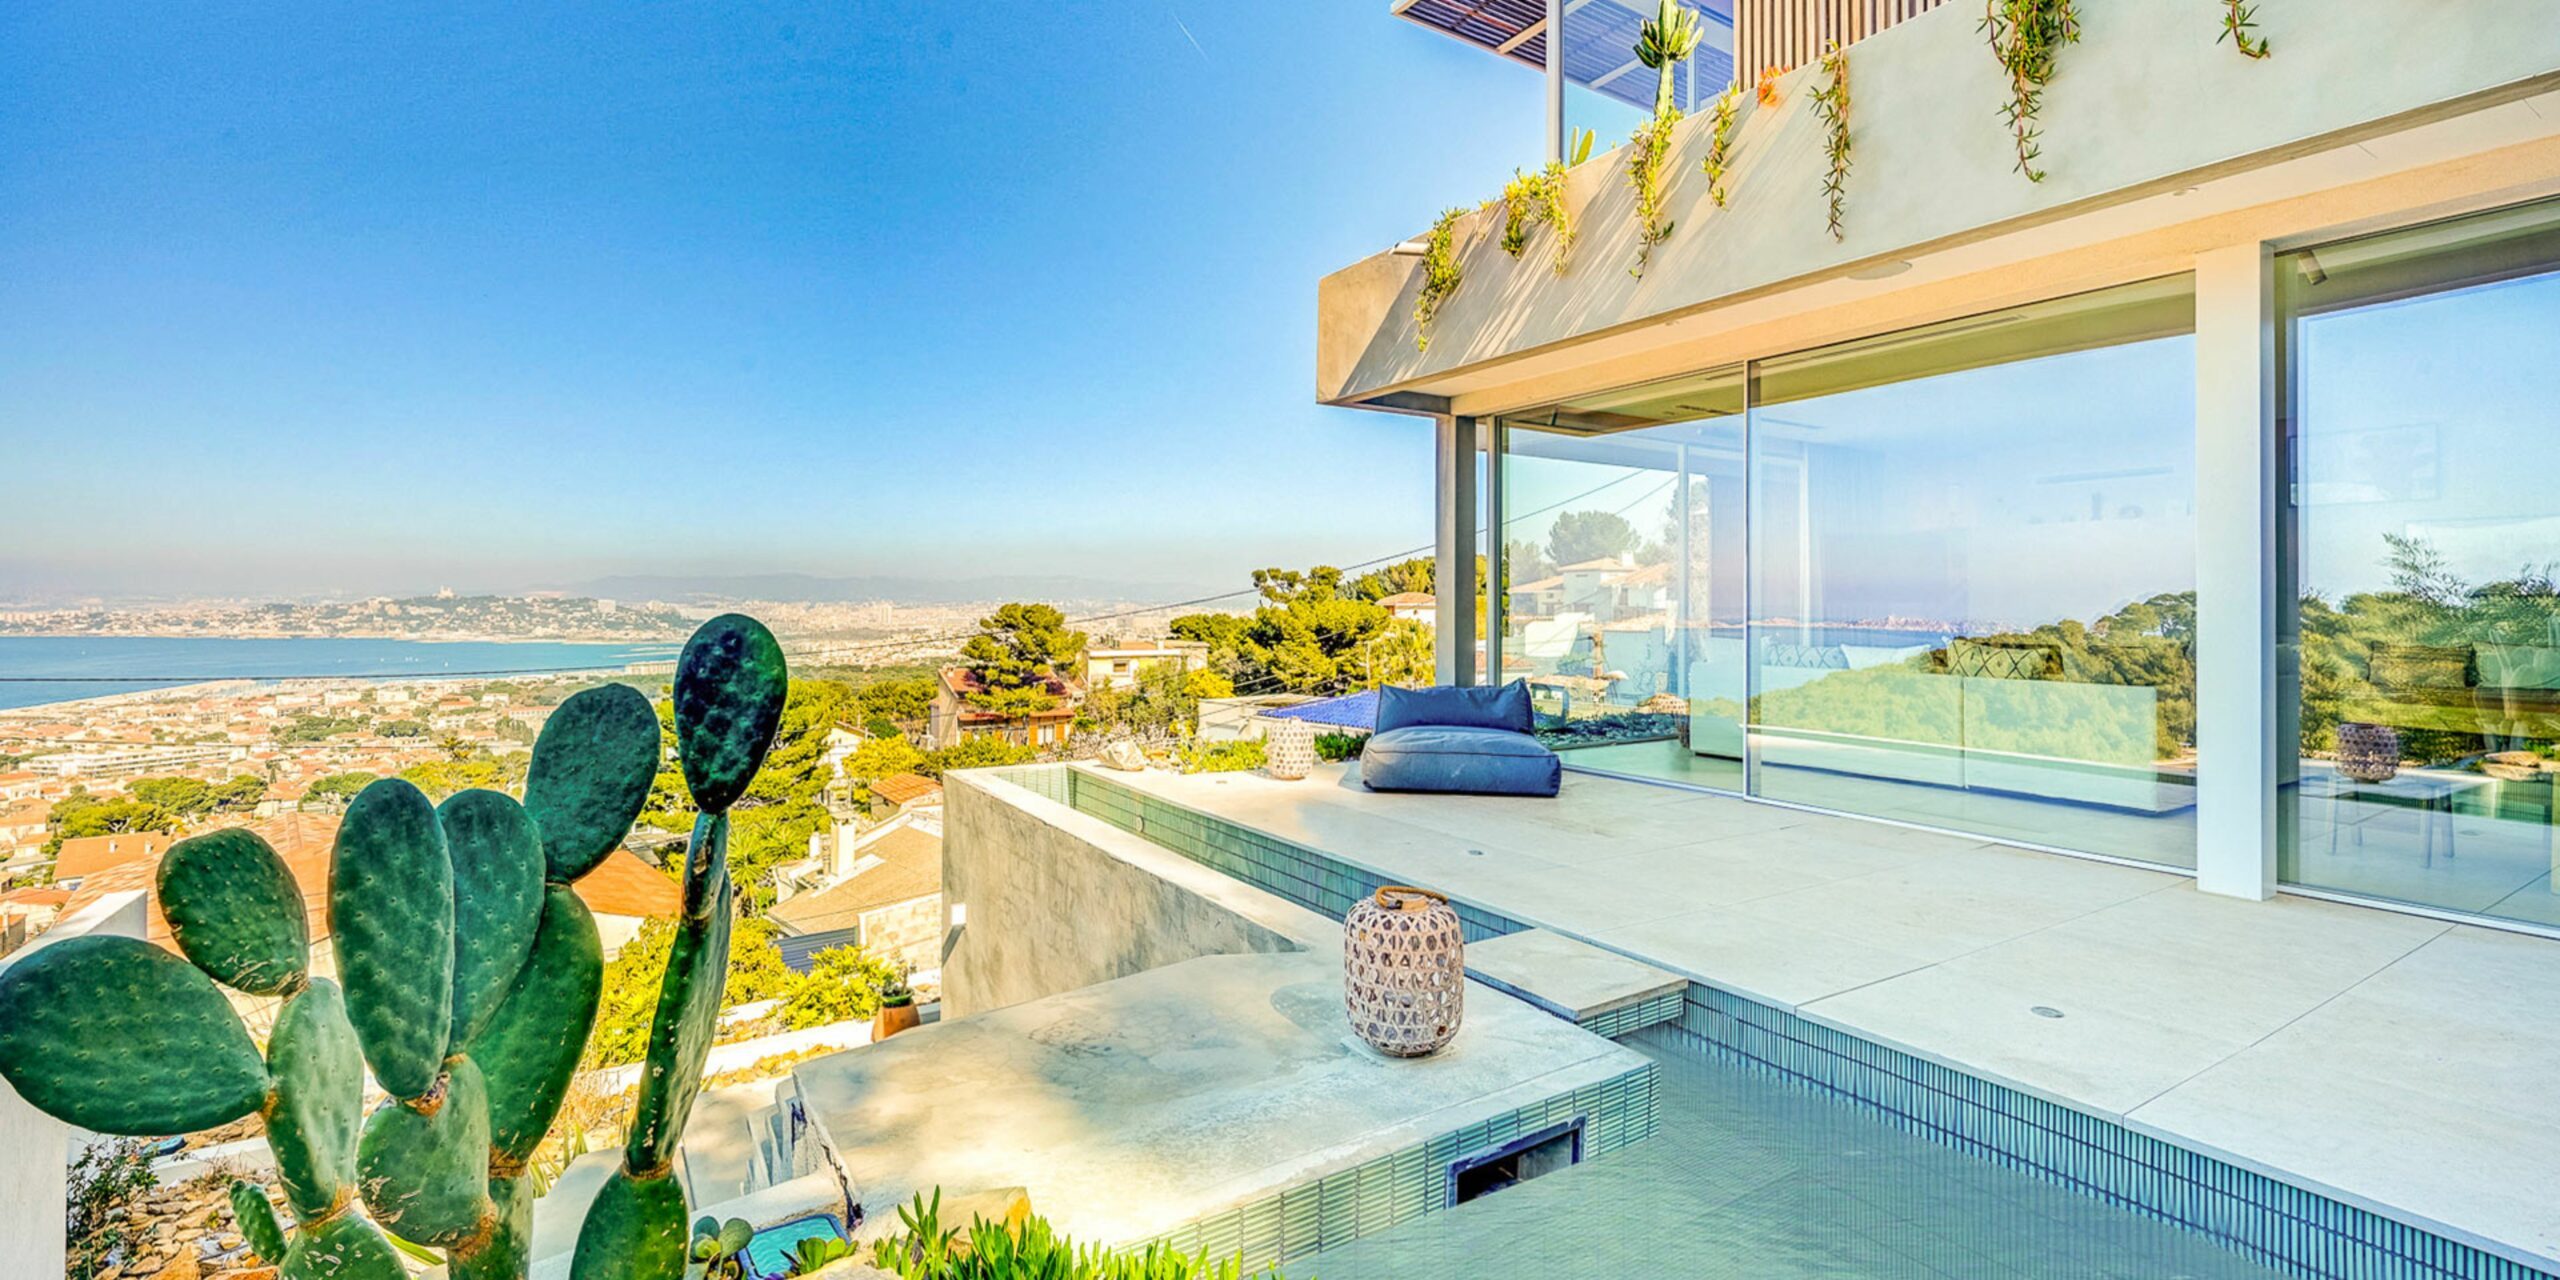 La terrasse avec piscine de la villa de Marseille